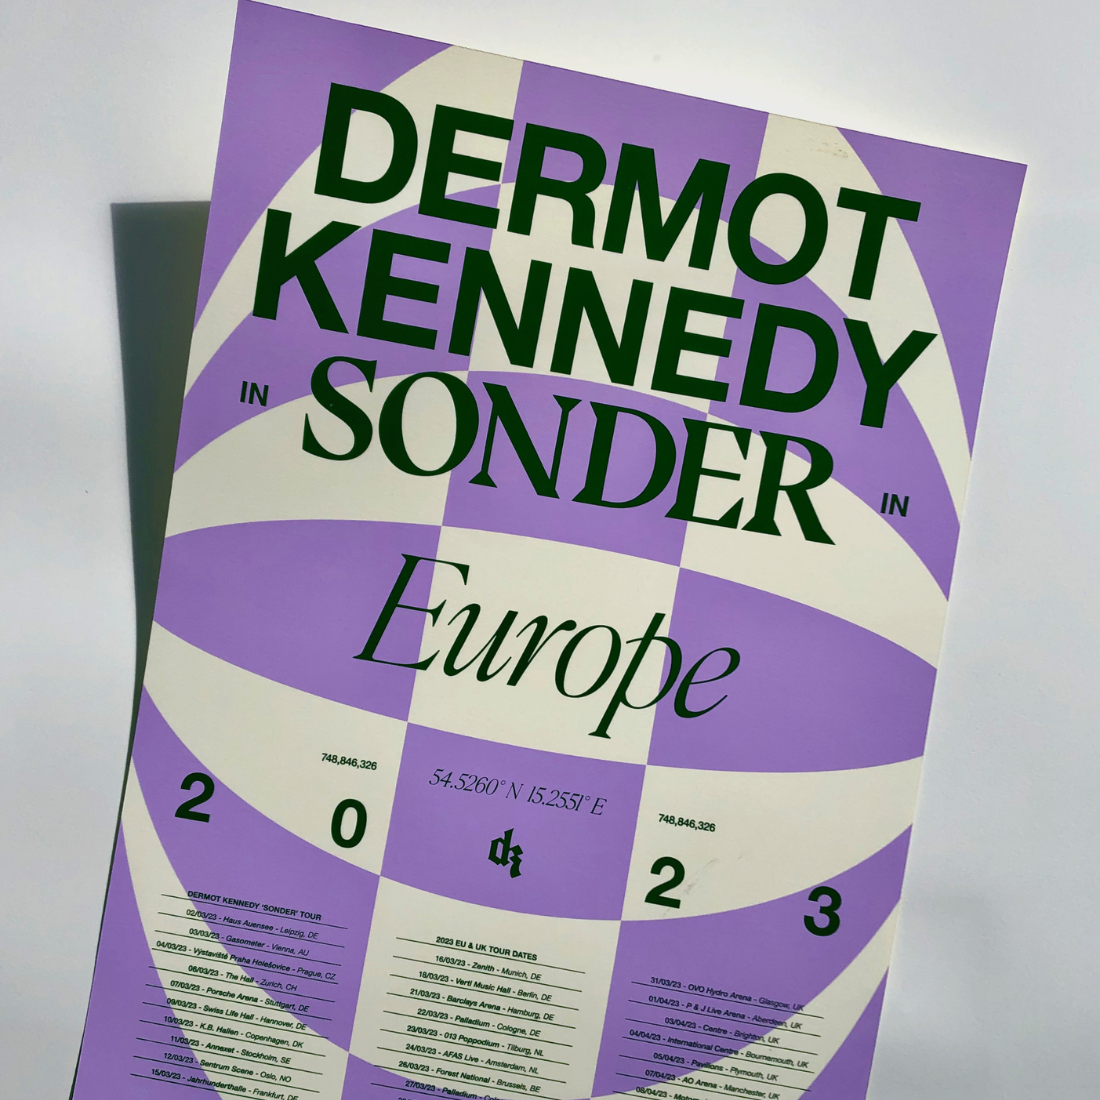 Dermot Kennedy - Sonder Tour: EU/UK Edition Screenprint